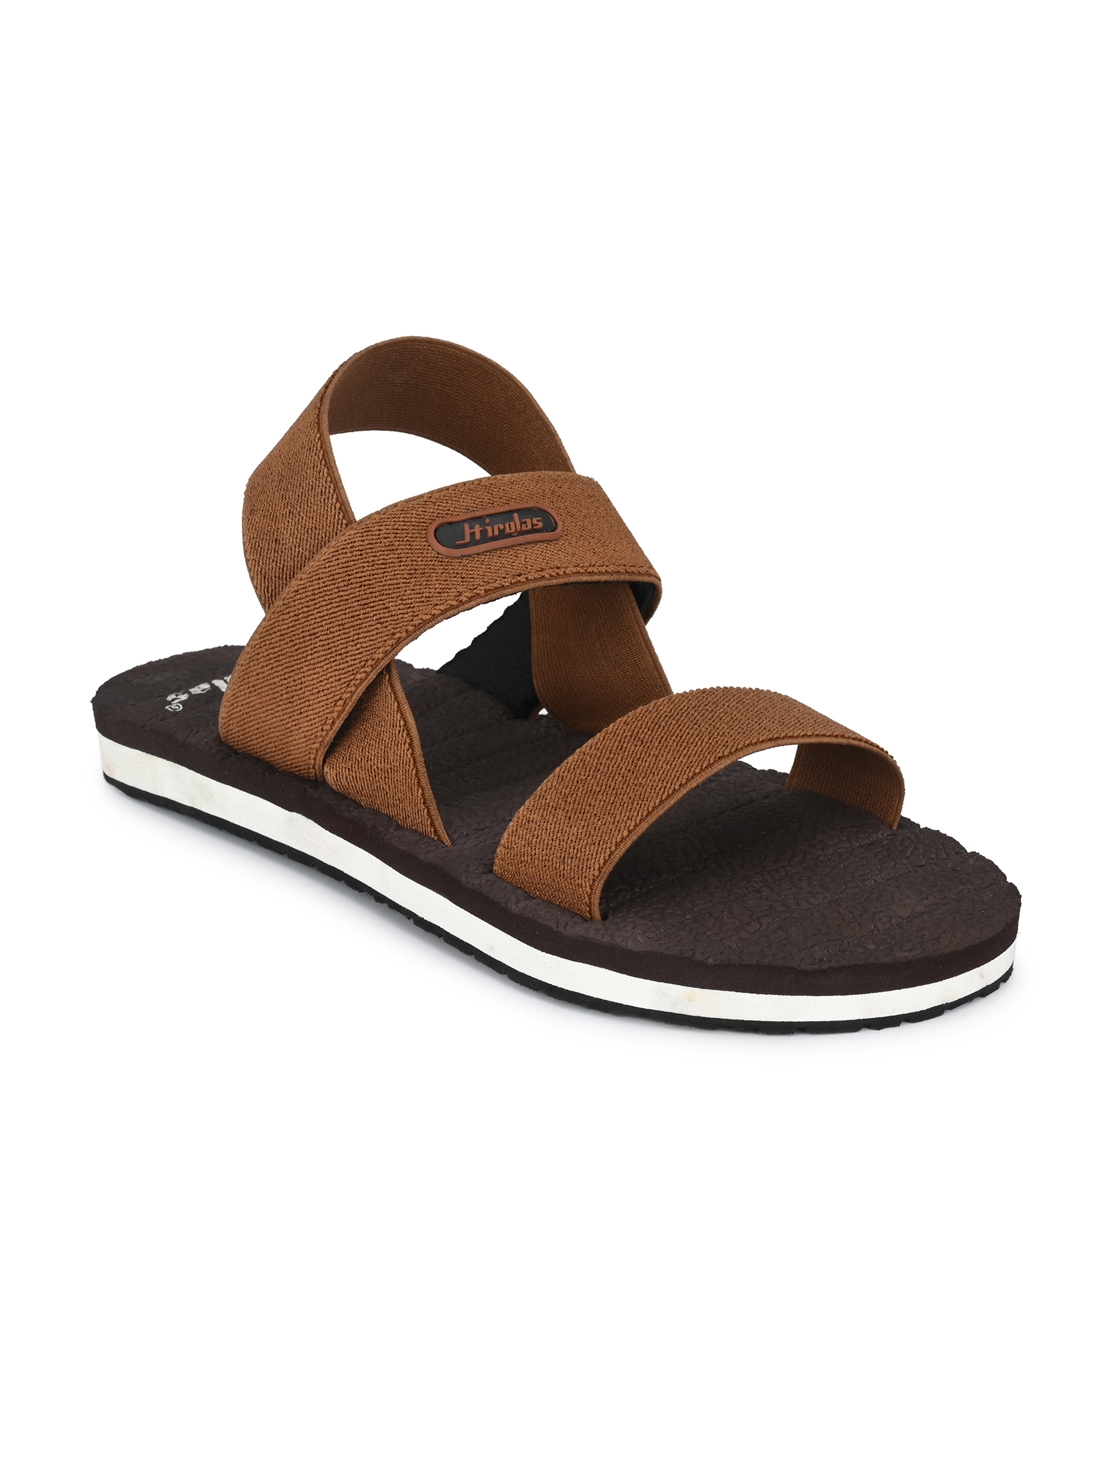 Hirolas | Hirolas  Trendy Flip-Flops Elasticated comfortable Slippers - Tan